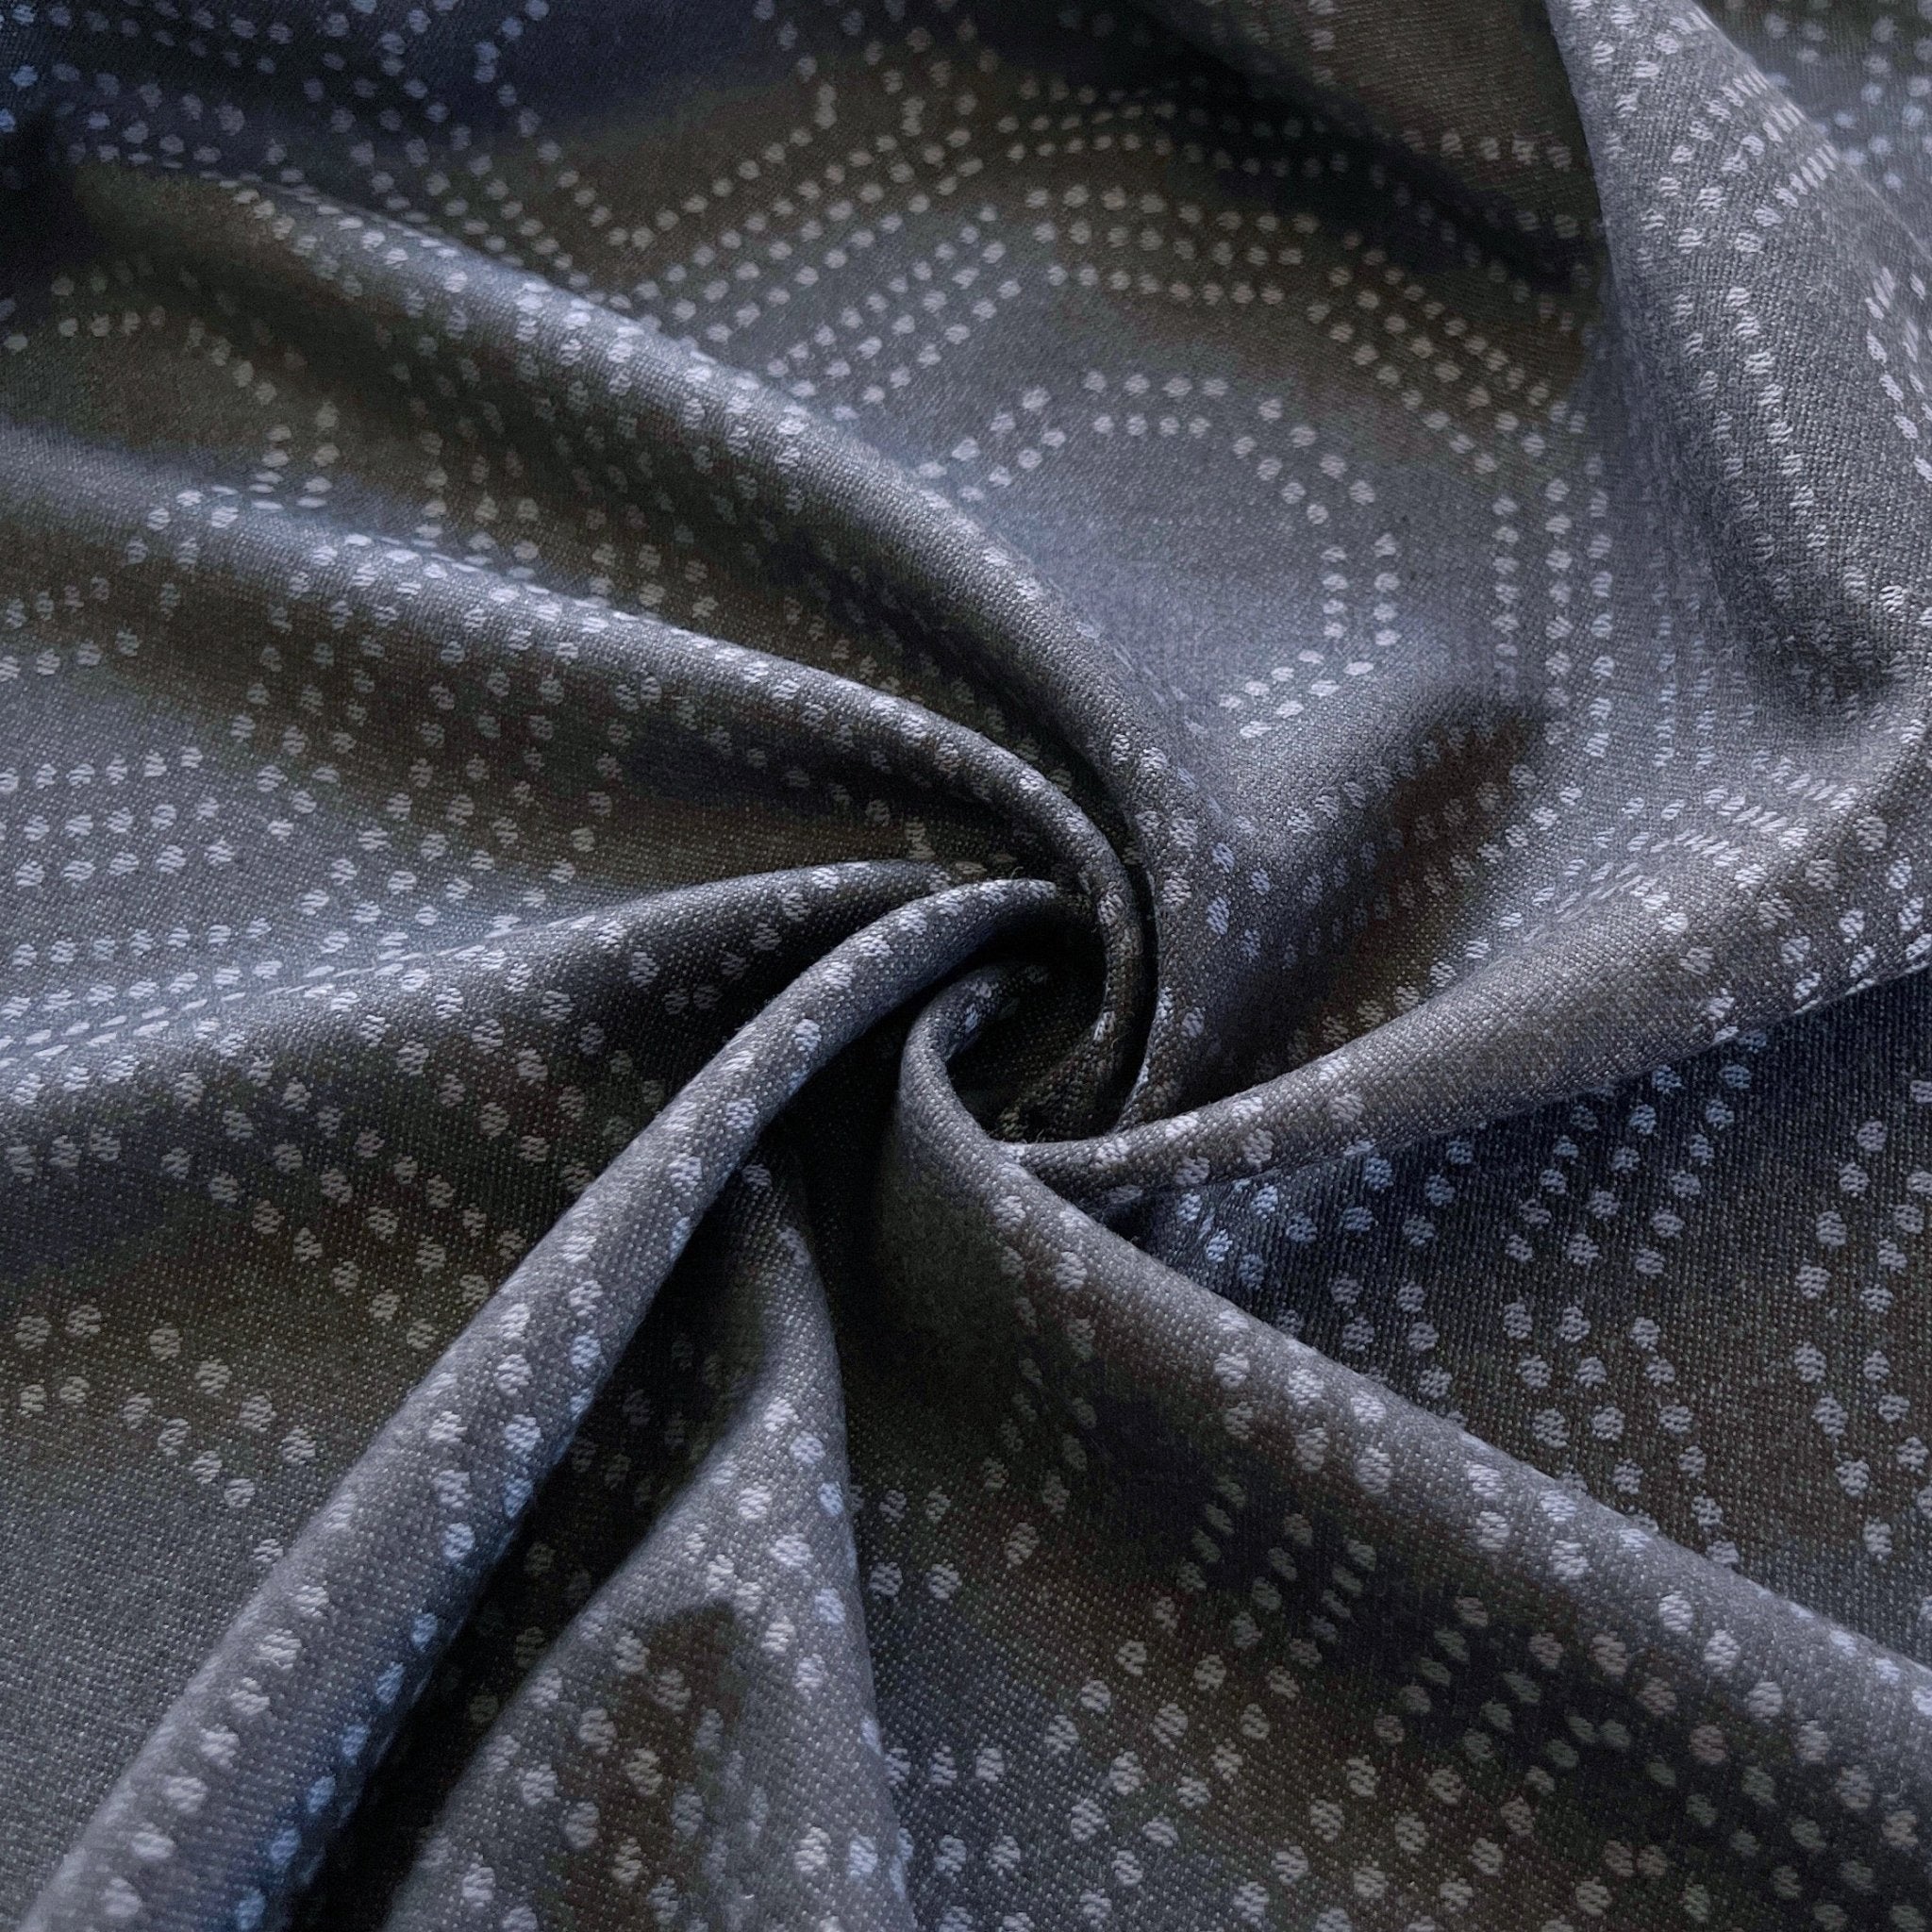 Pico Textiles Black Cloth Cotton Fabric - 45 Wide - 4 Yards Bolt - Style#  4505 